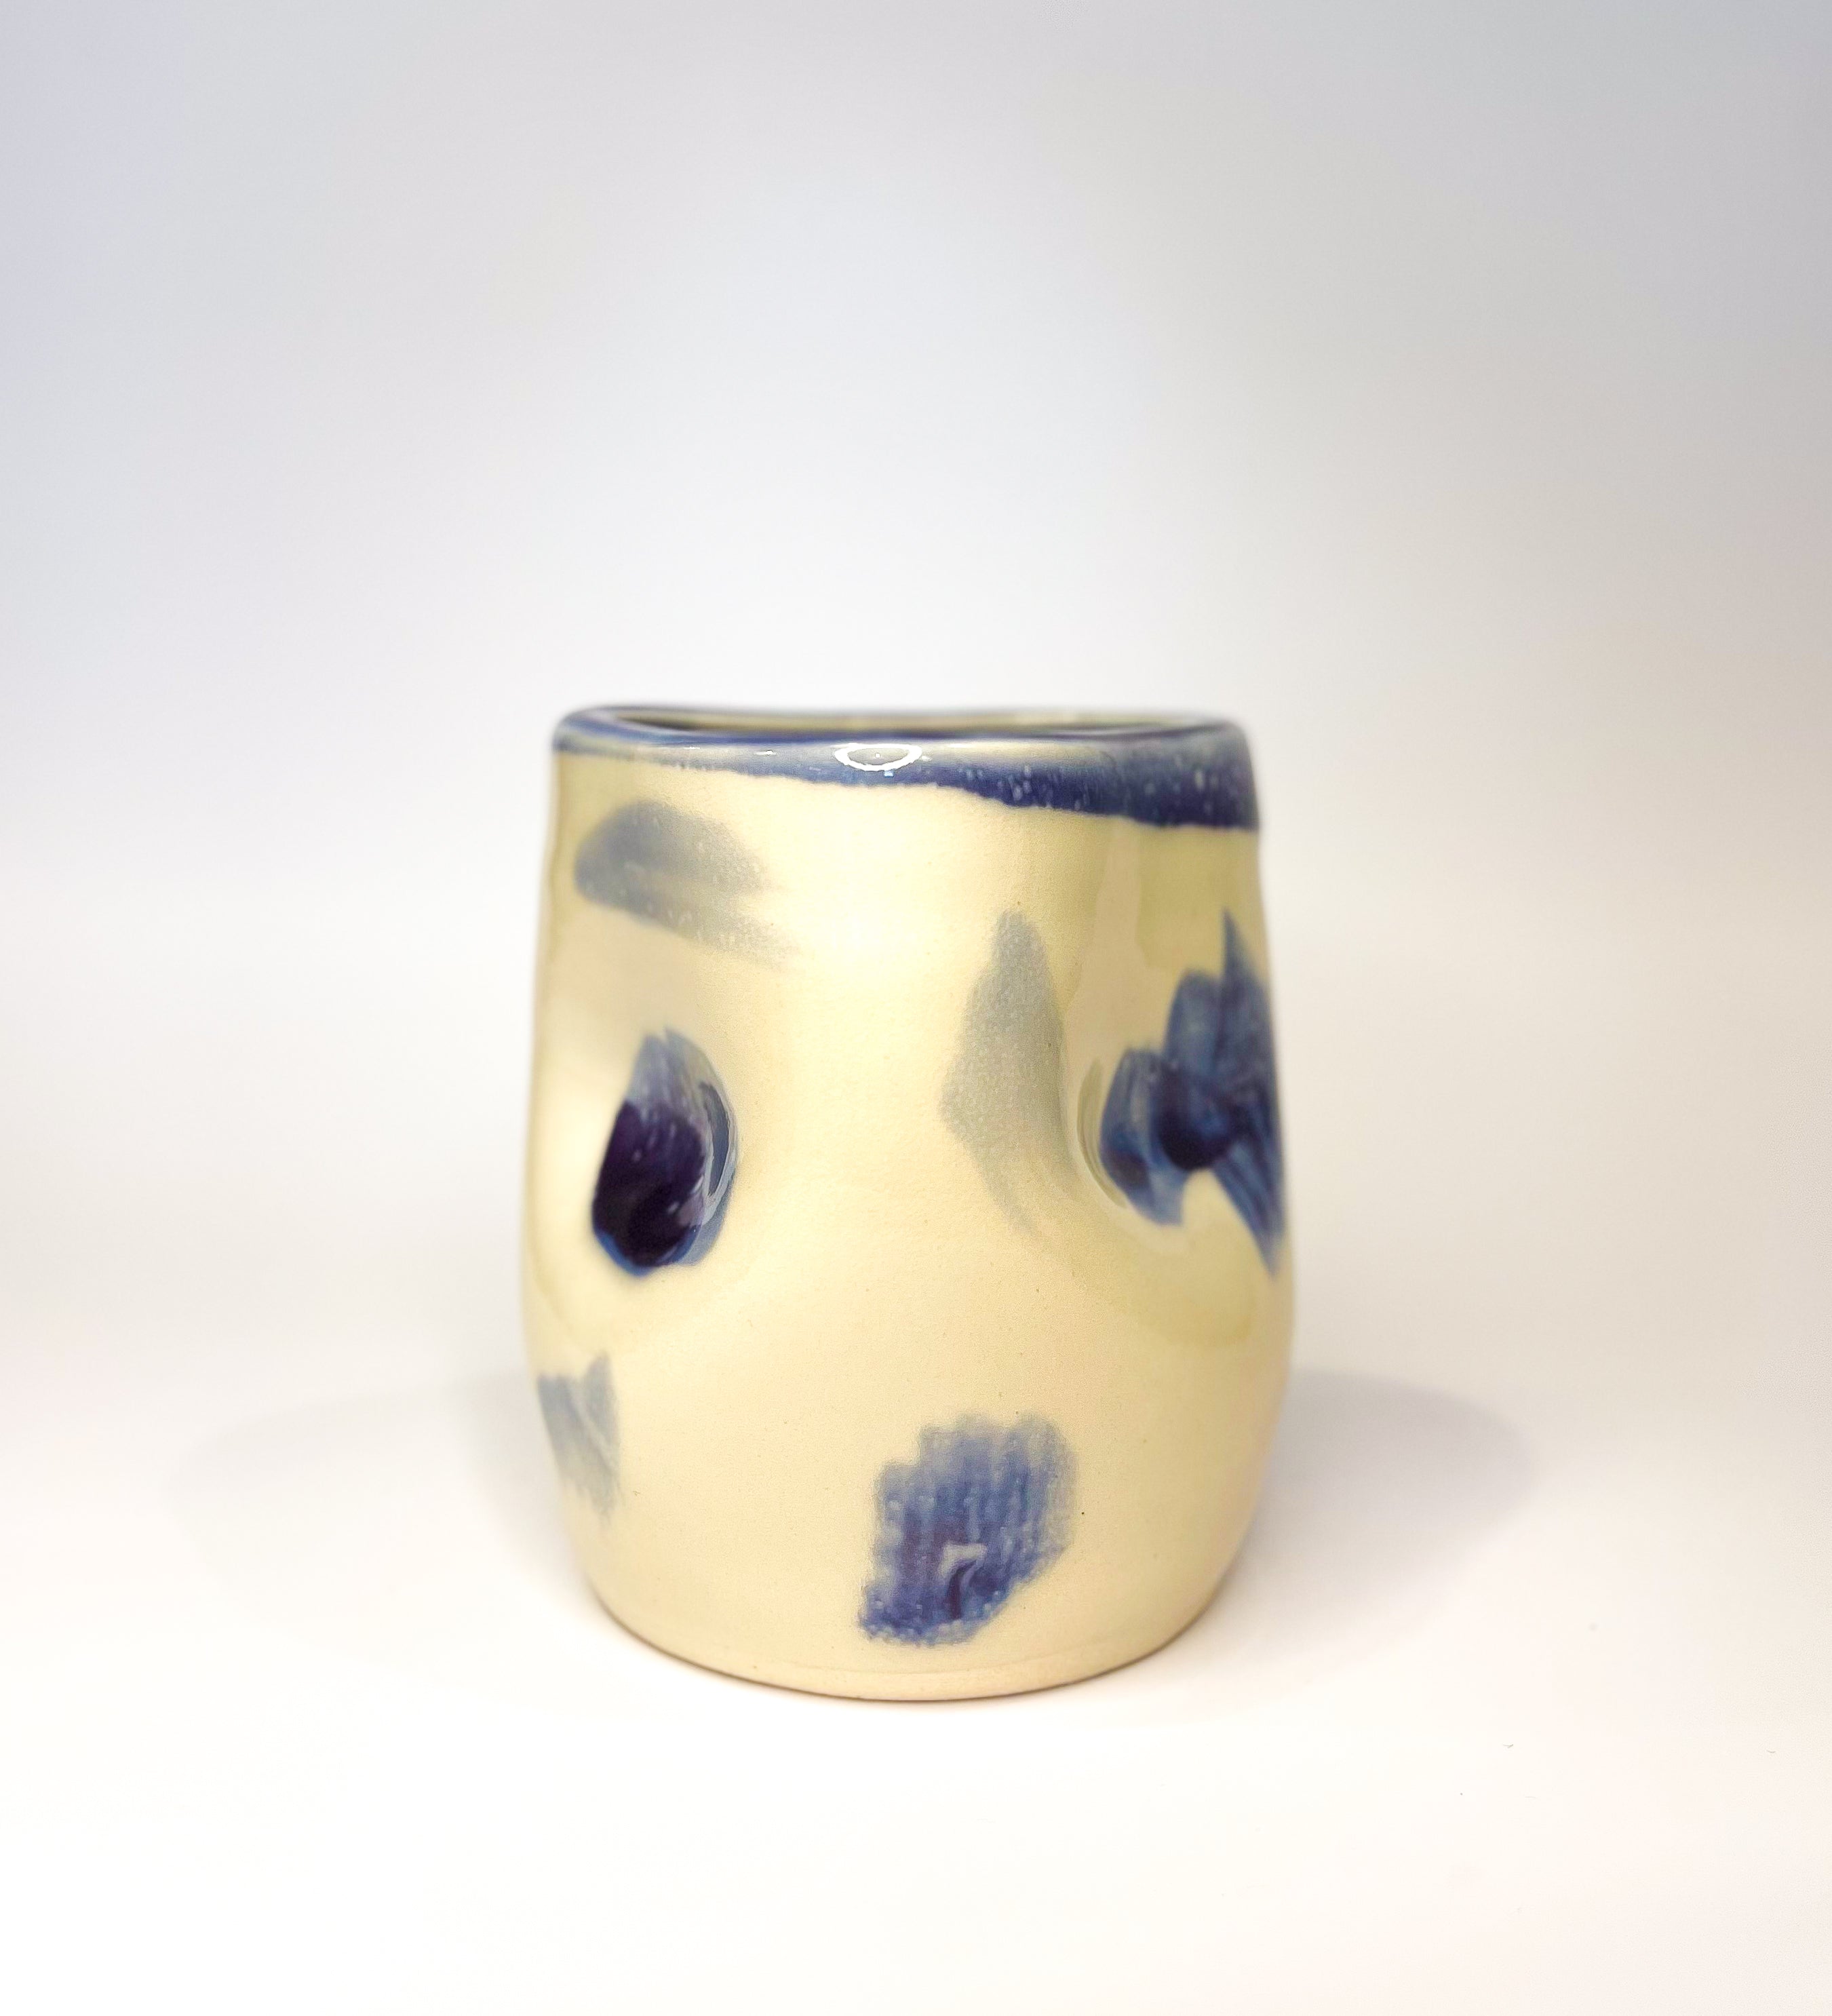 Studio Nia Hand-Painted Cup in Bone/Royal